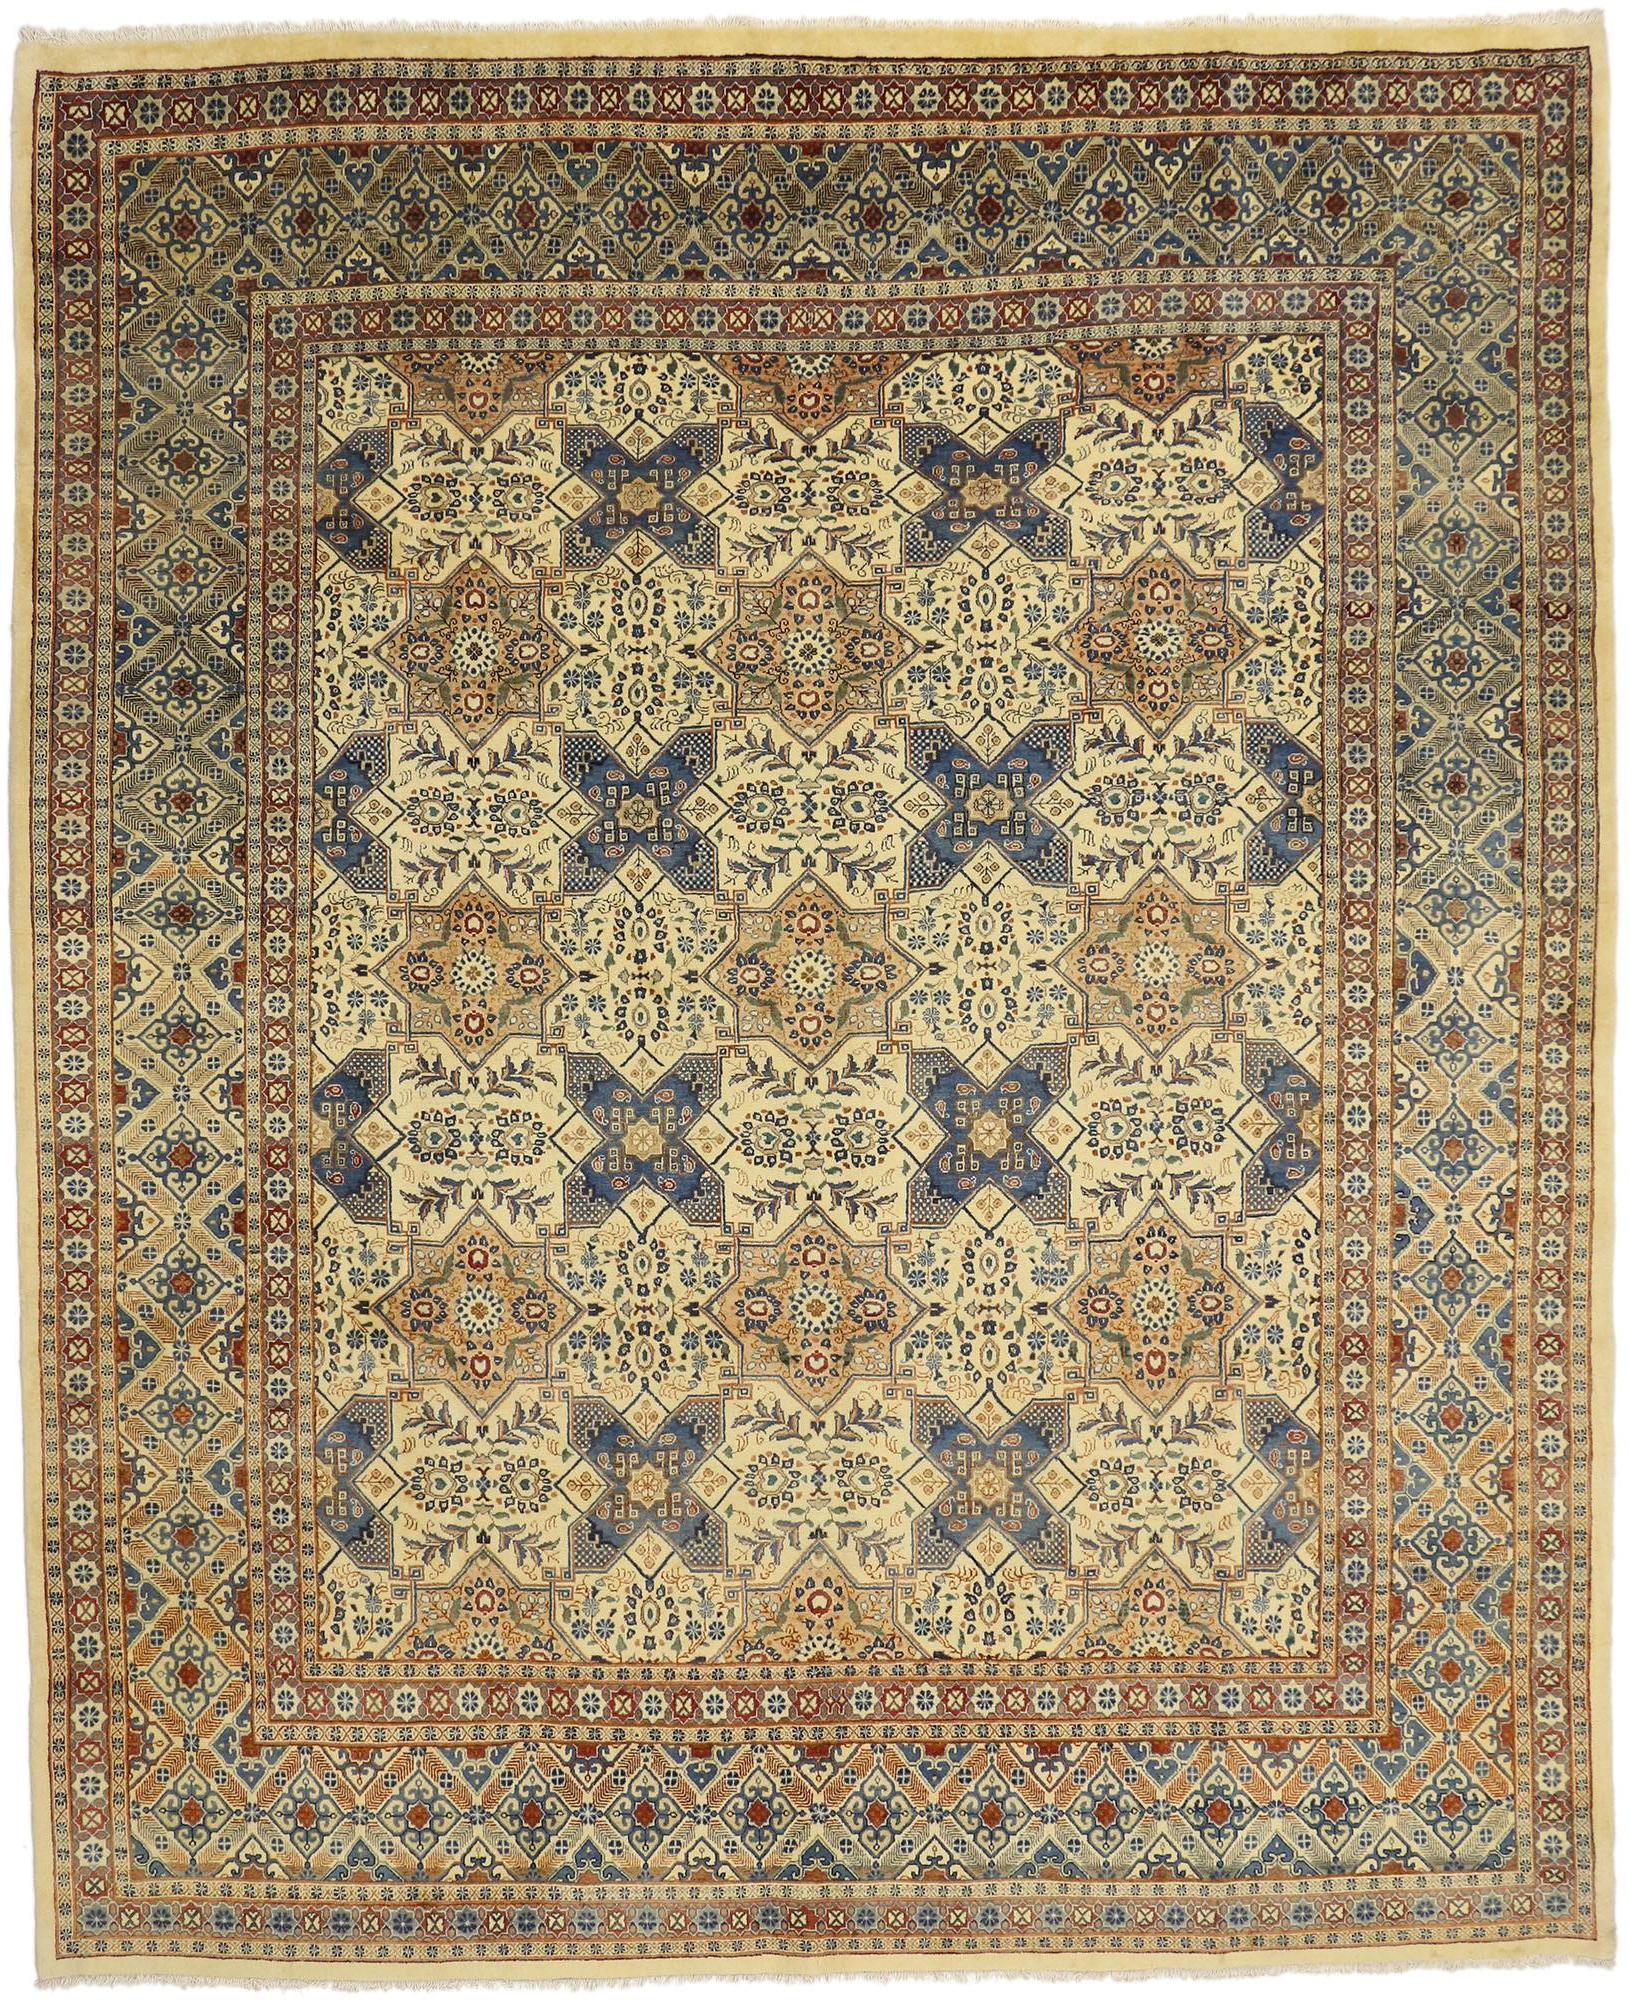 Vintage Persian Mashhad Rug with Islamic Quatrefoil Tile Geometric Pattern